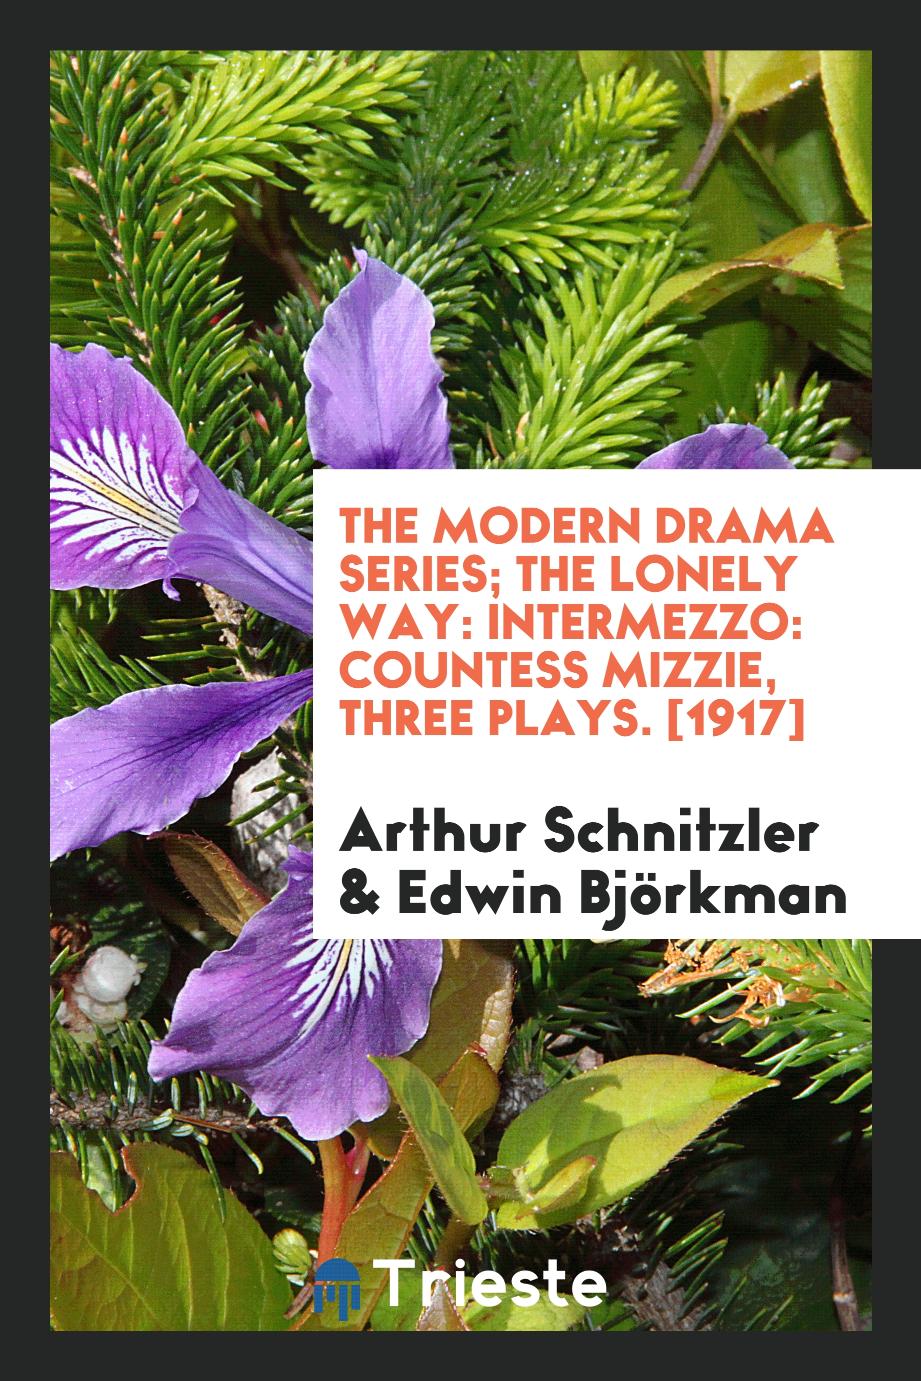 Arthur Schnitzler, Edwin Bjorkman - The Modern Drama Series; The Lonely Way: Intermezzo: Countess Mizzie, Three Plays. [1917]